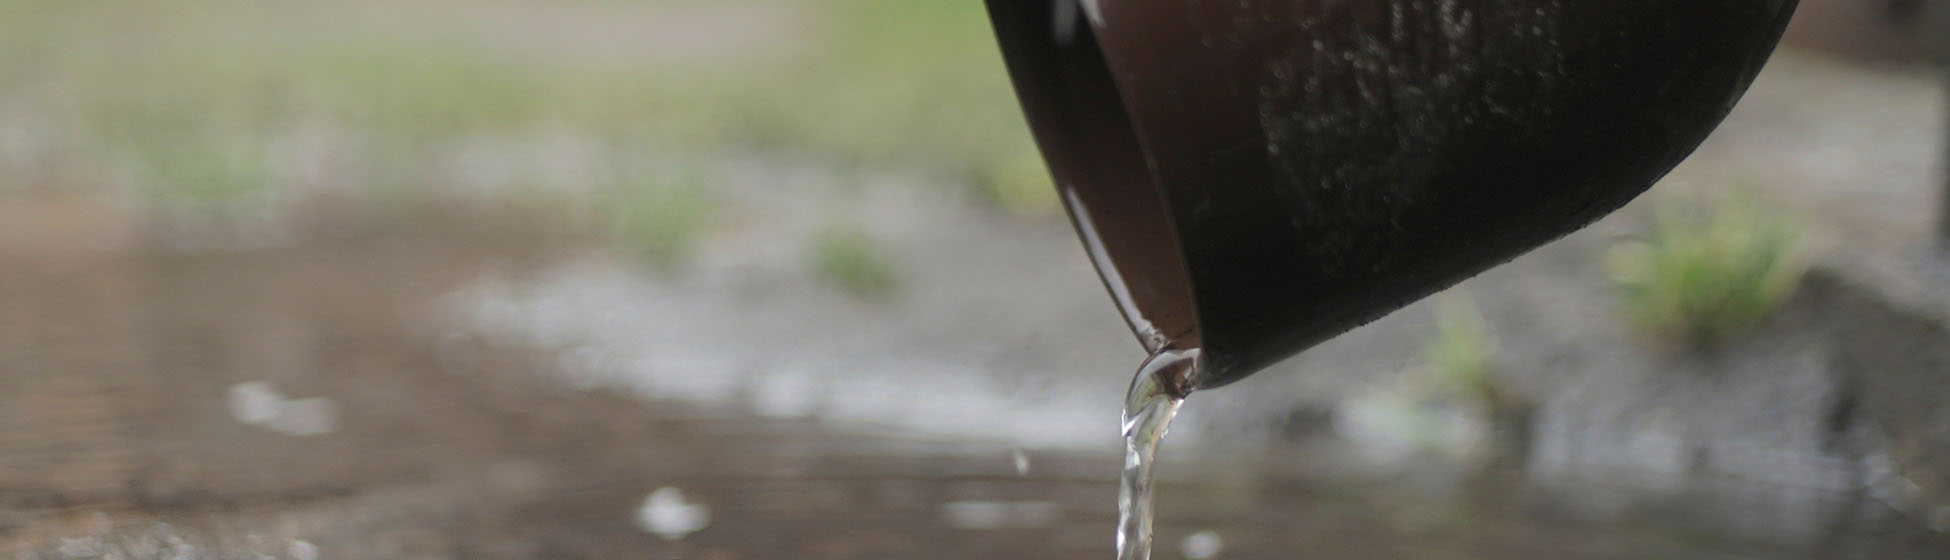 Installation eau pluviale